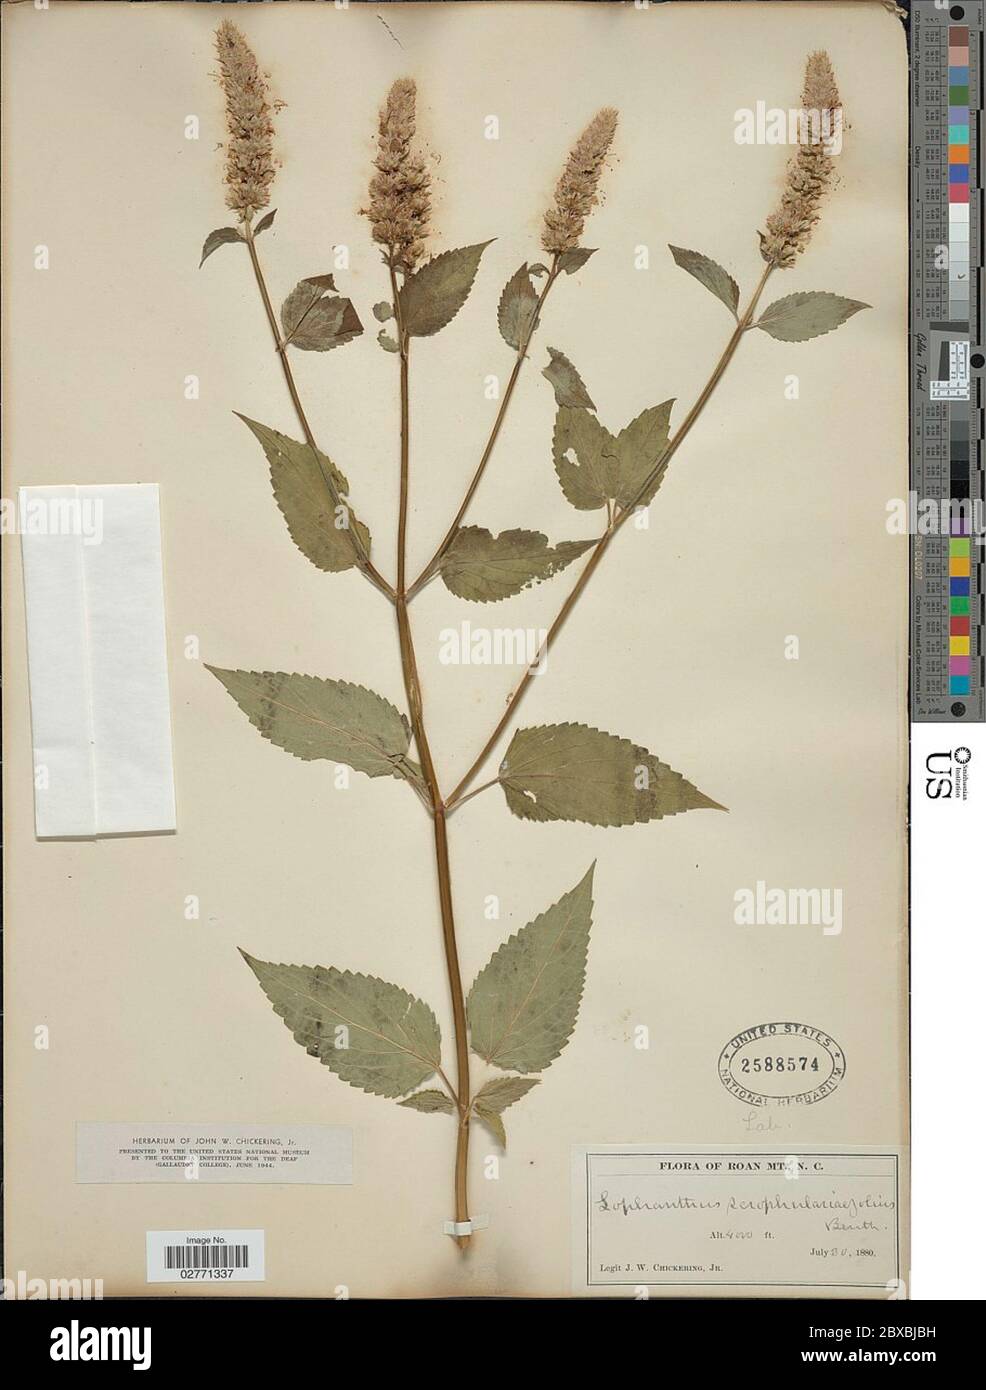 Agastache scrophulariaefolia Willd Kuntze Agastache scrophulariaefolia Willd Kuntze. Stock Photo